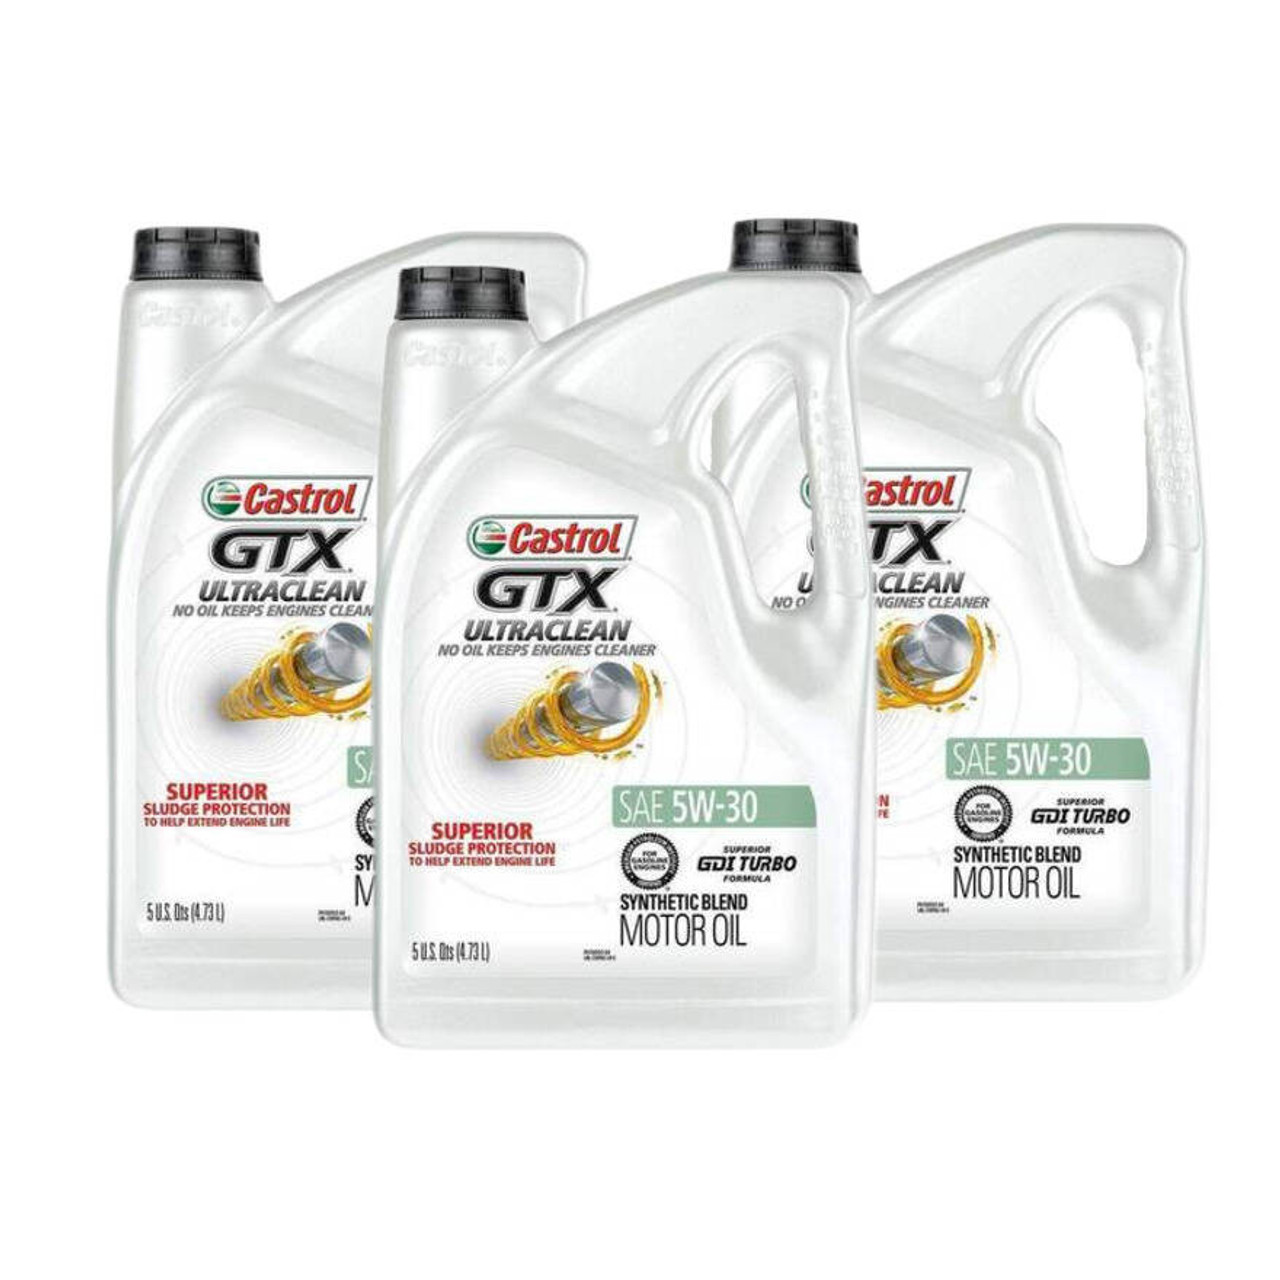 Buy CASTROL GTX ULTRACLEAN SAE 5w-30 Semi-Synthetic Motor Oil Here